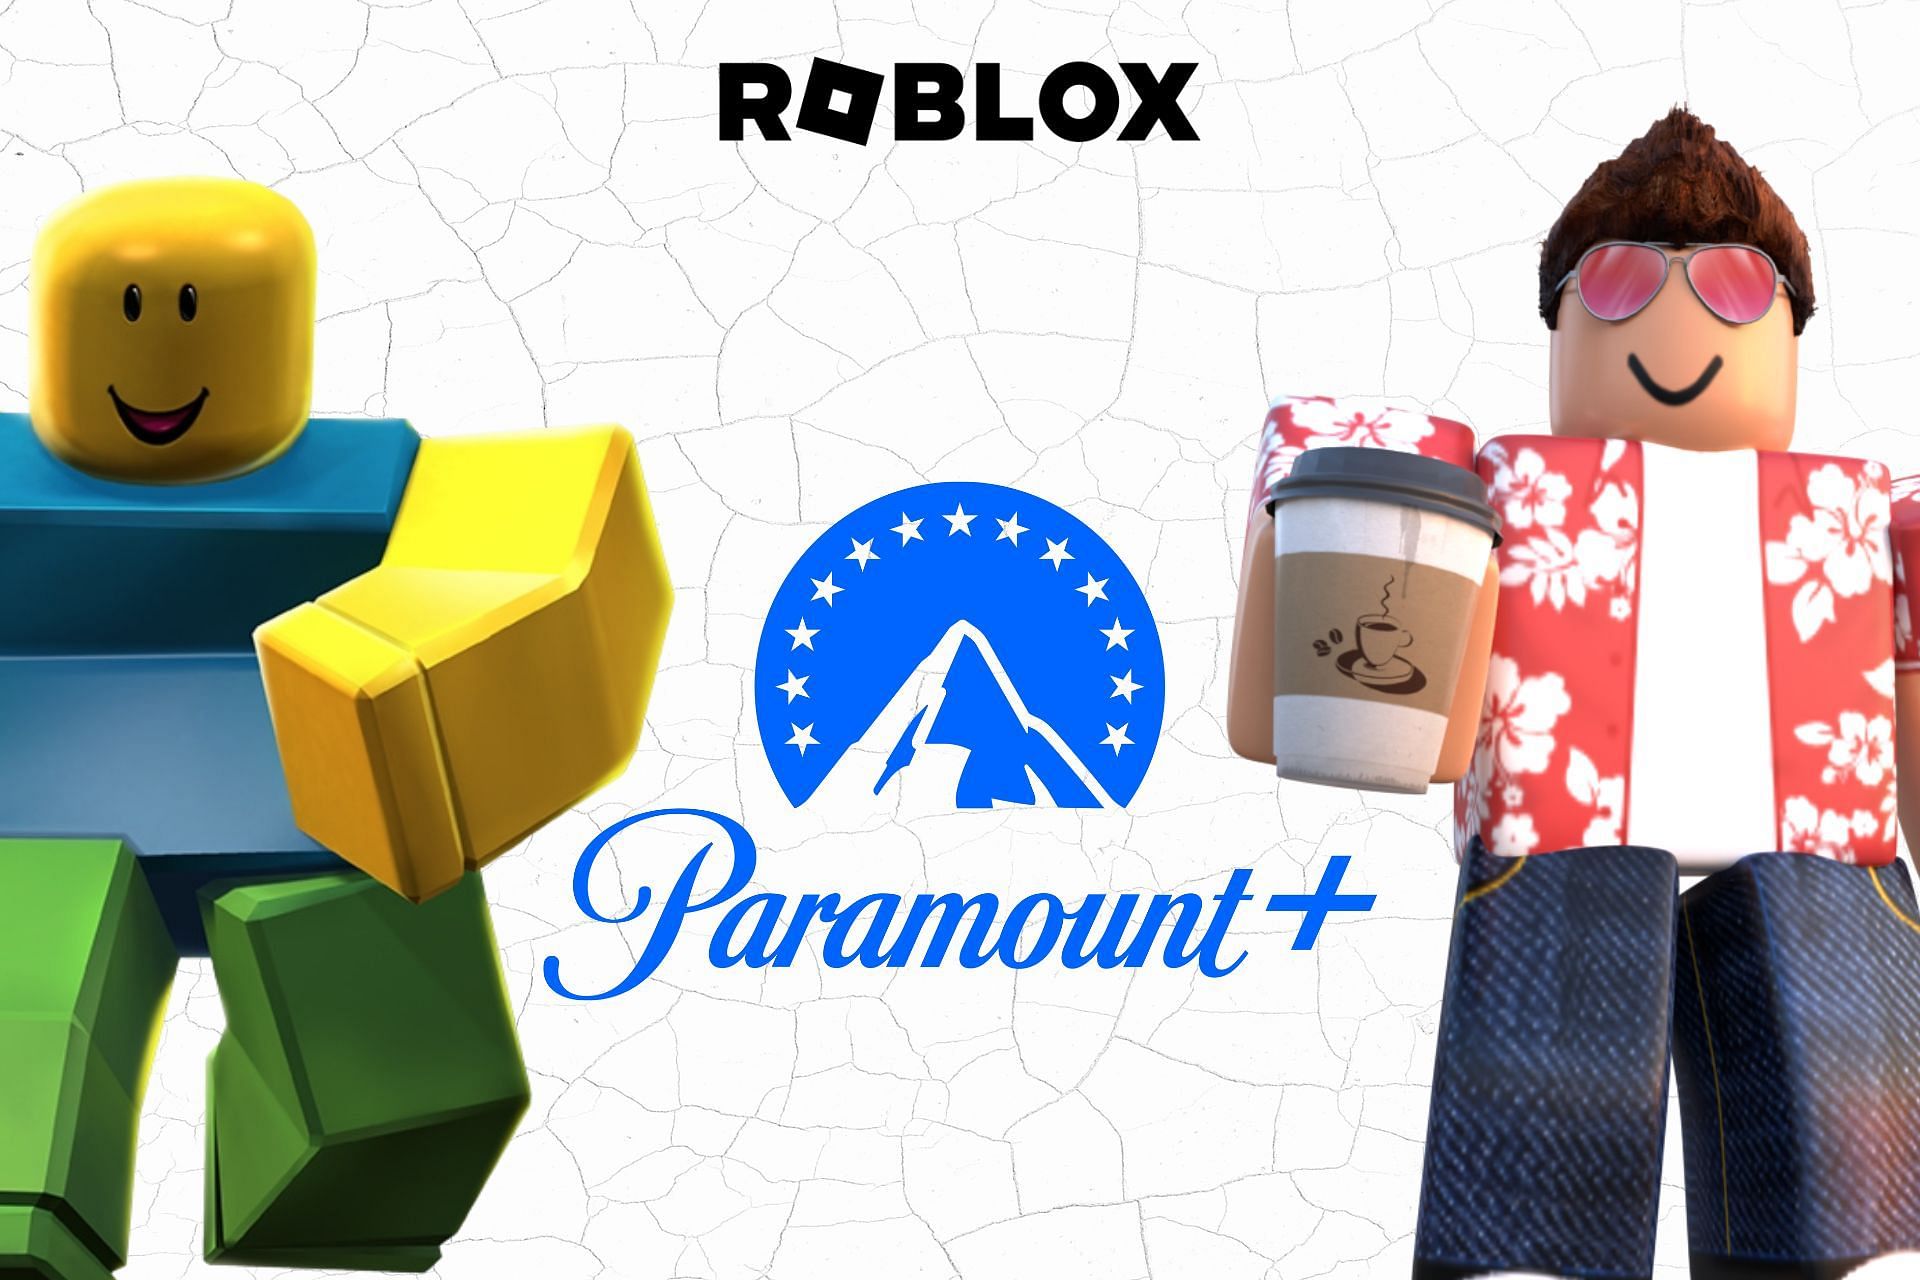 Obtain free Parmount+ subscription for FREE in Roblox (Image via Sportskeeda)